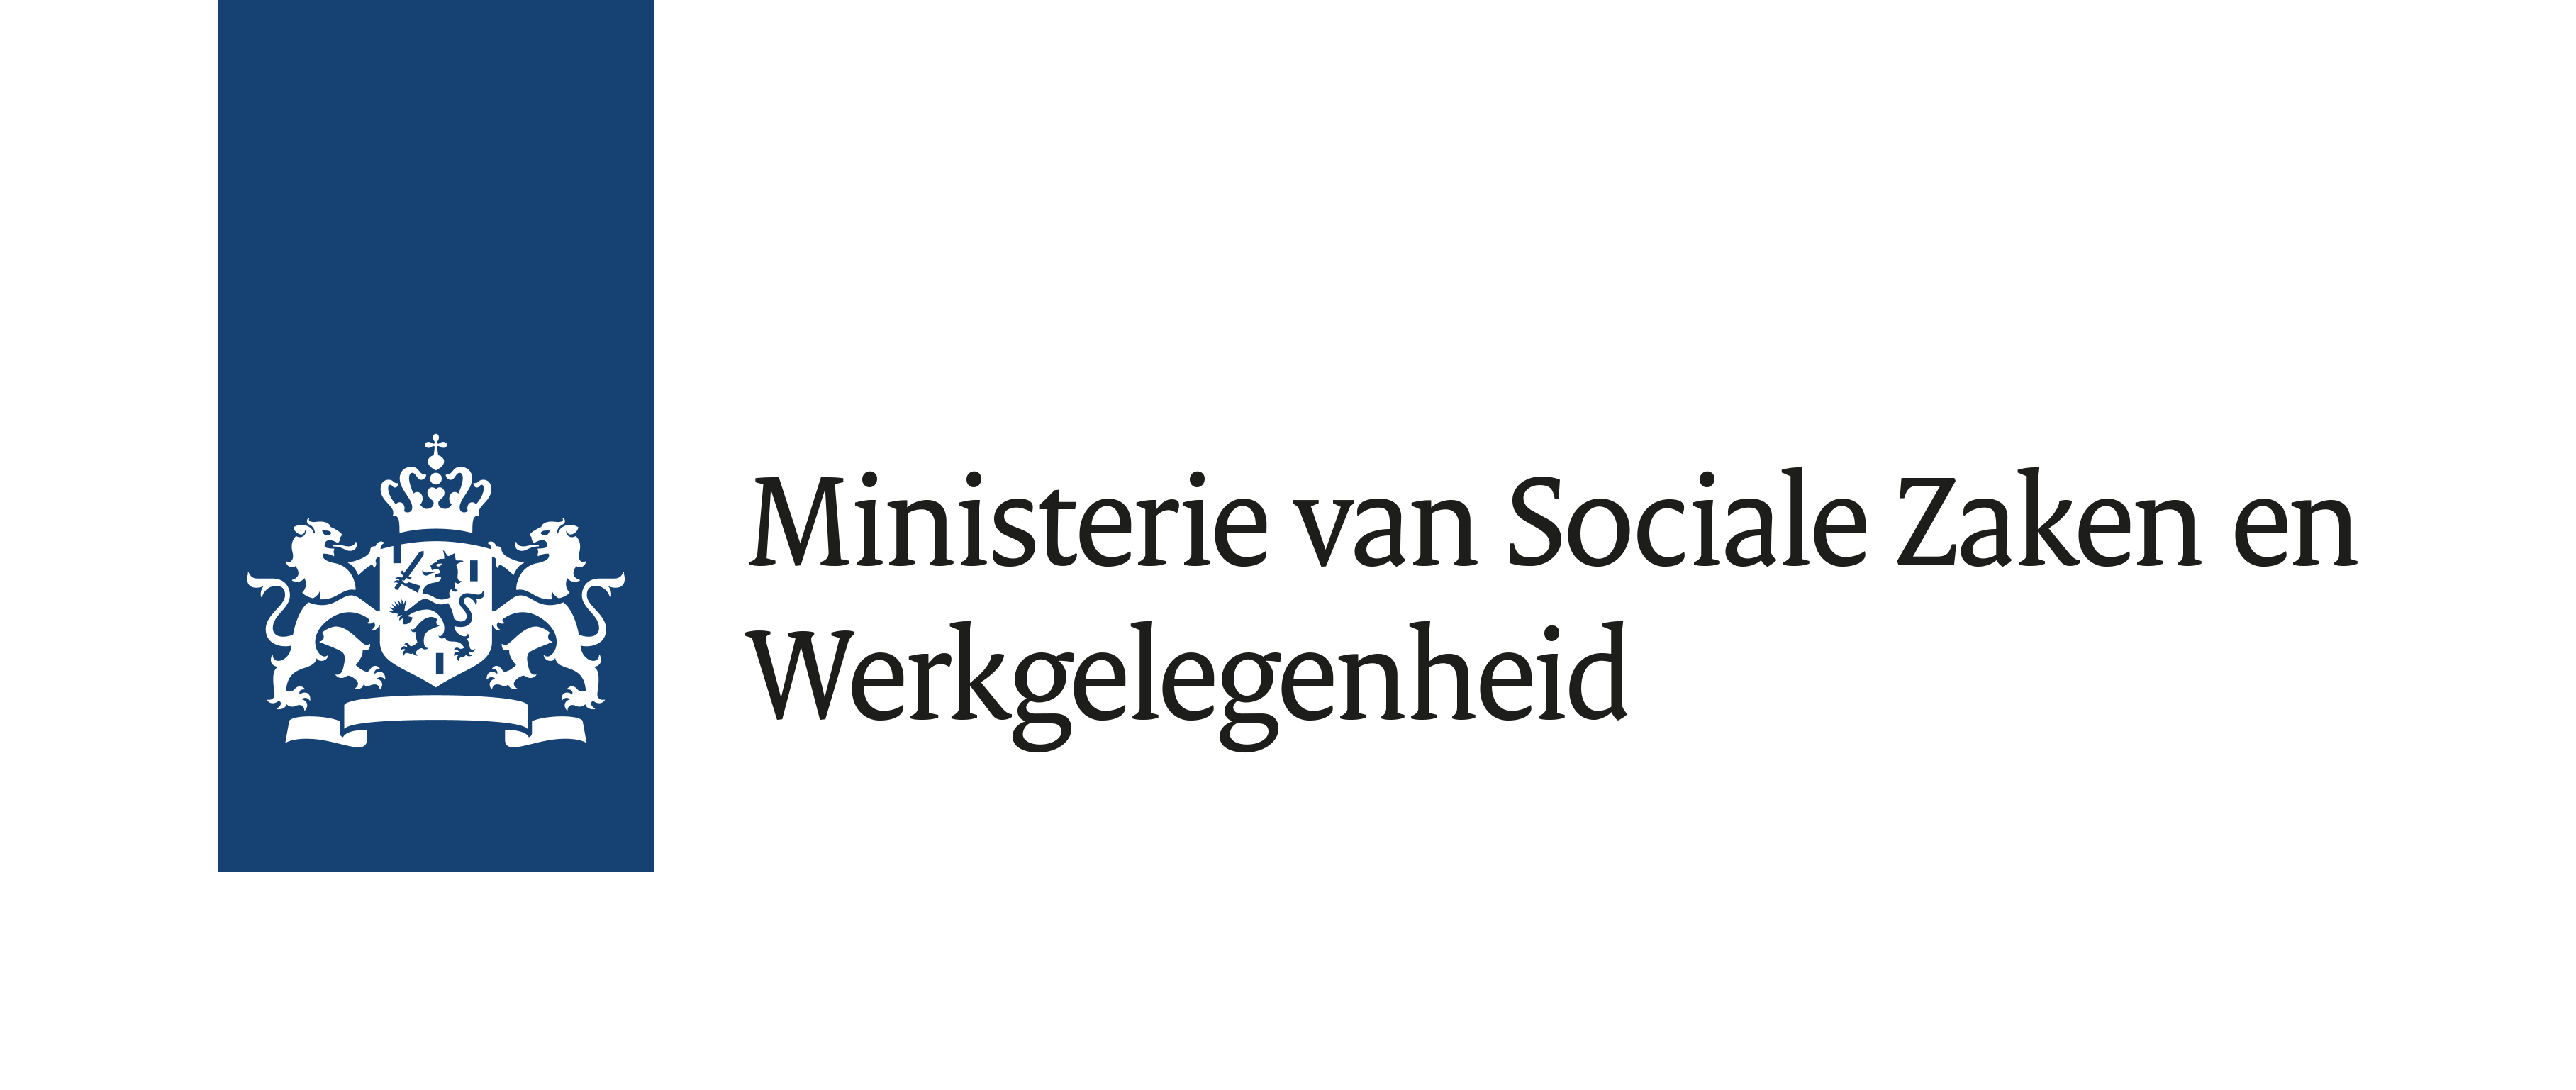 szw-logo-online-ex-pos-nl